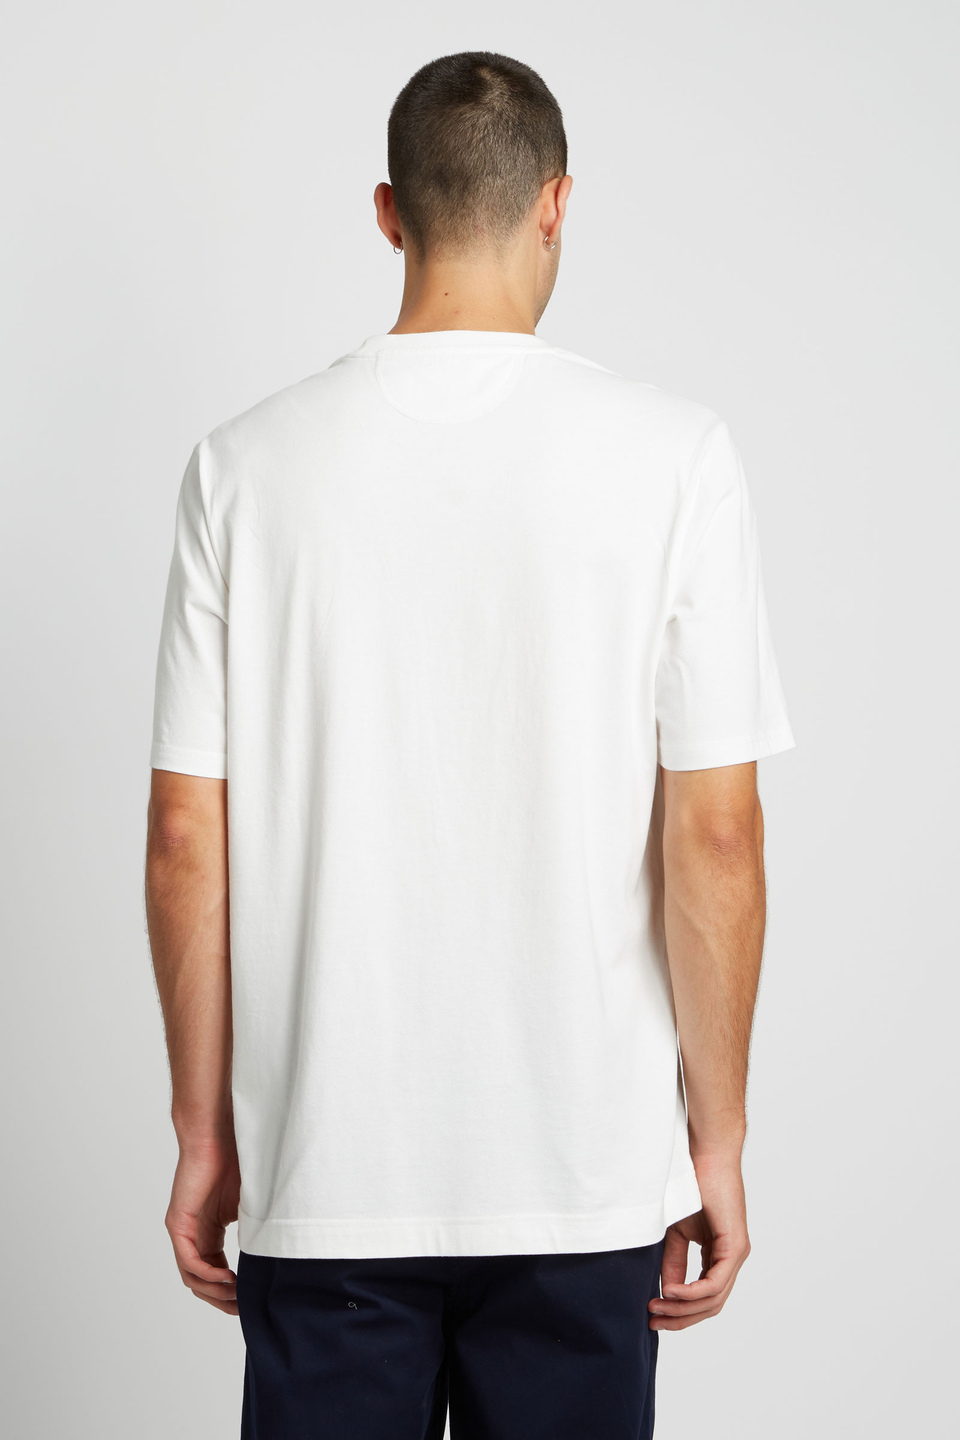 Men's oversized short-sleeved 100% cotton T-shirt | La Martina - Official Online Shop